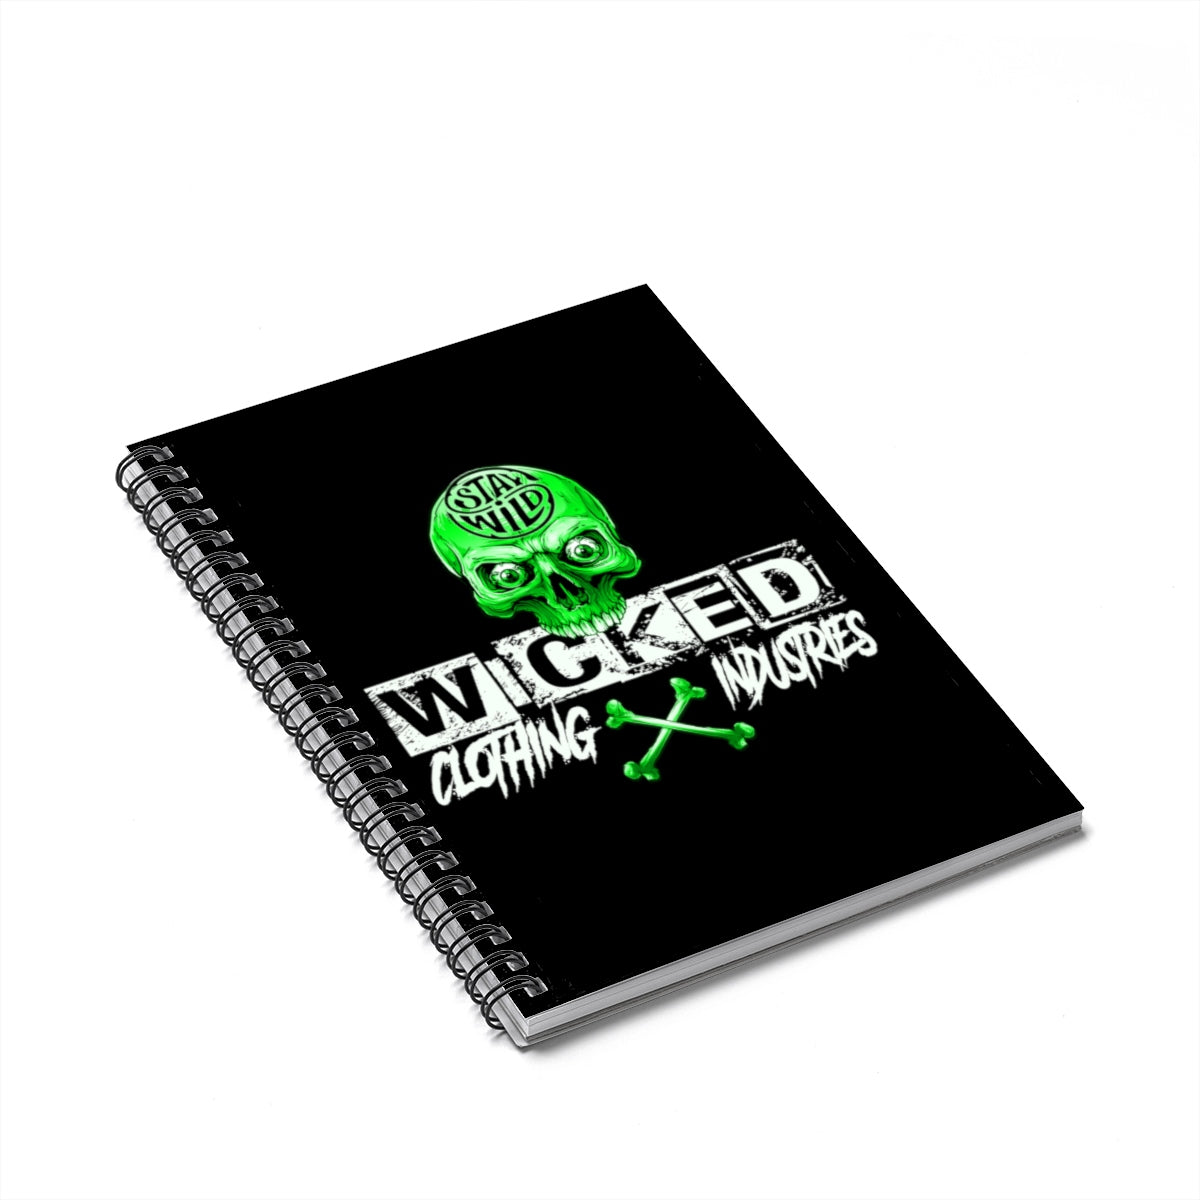 Stay Wild /Green Machine/Spiral Notebook - Ruled Line